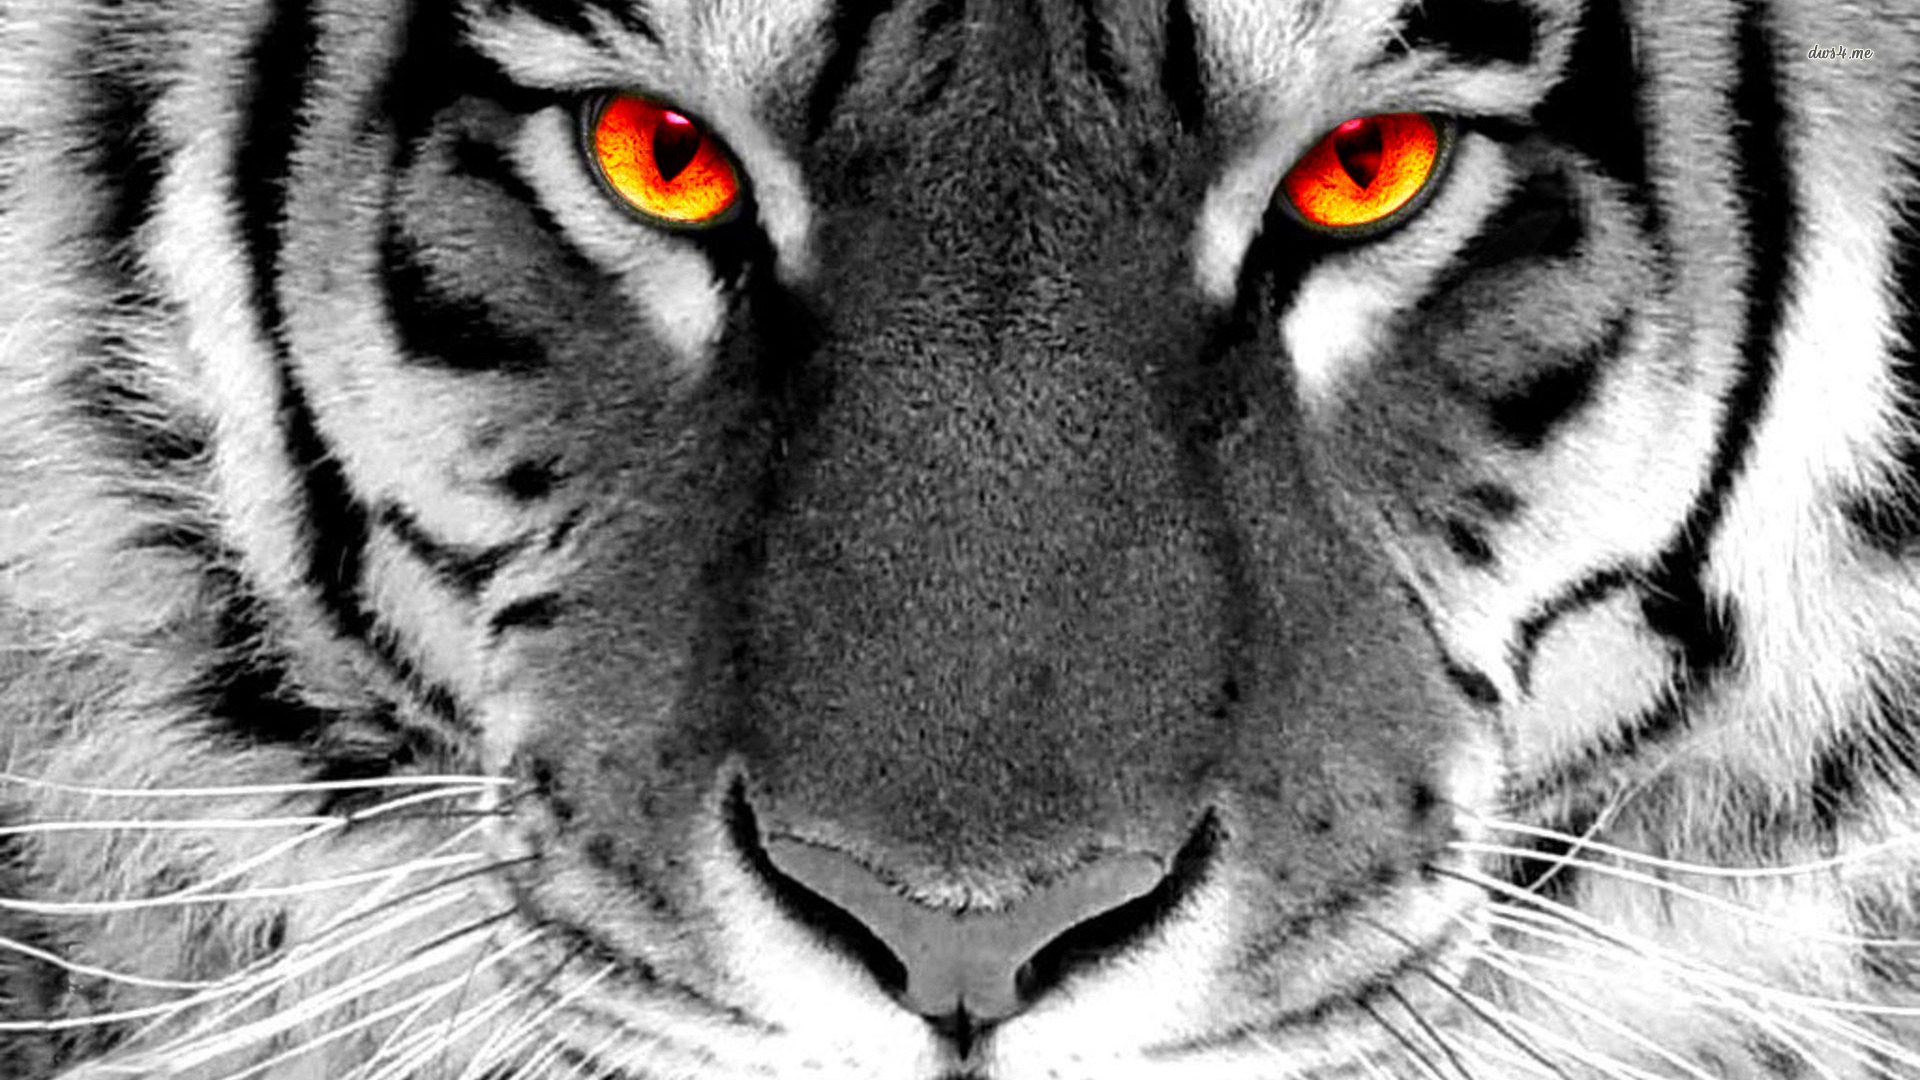 Fire Eyed Tiger Wallpaper HD by Meerk4tFTW on DeviantArt